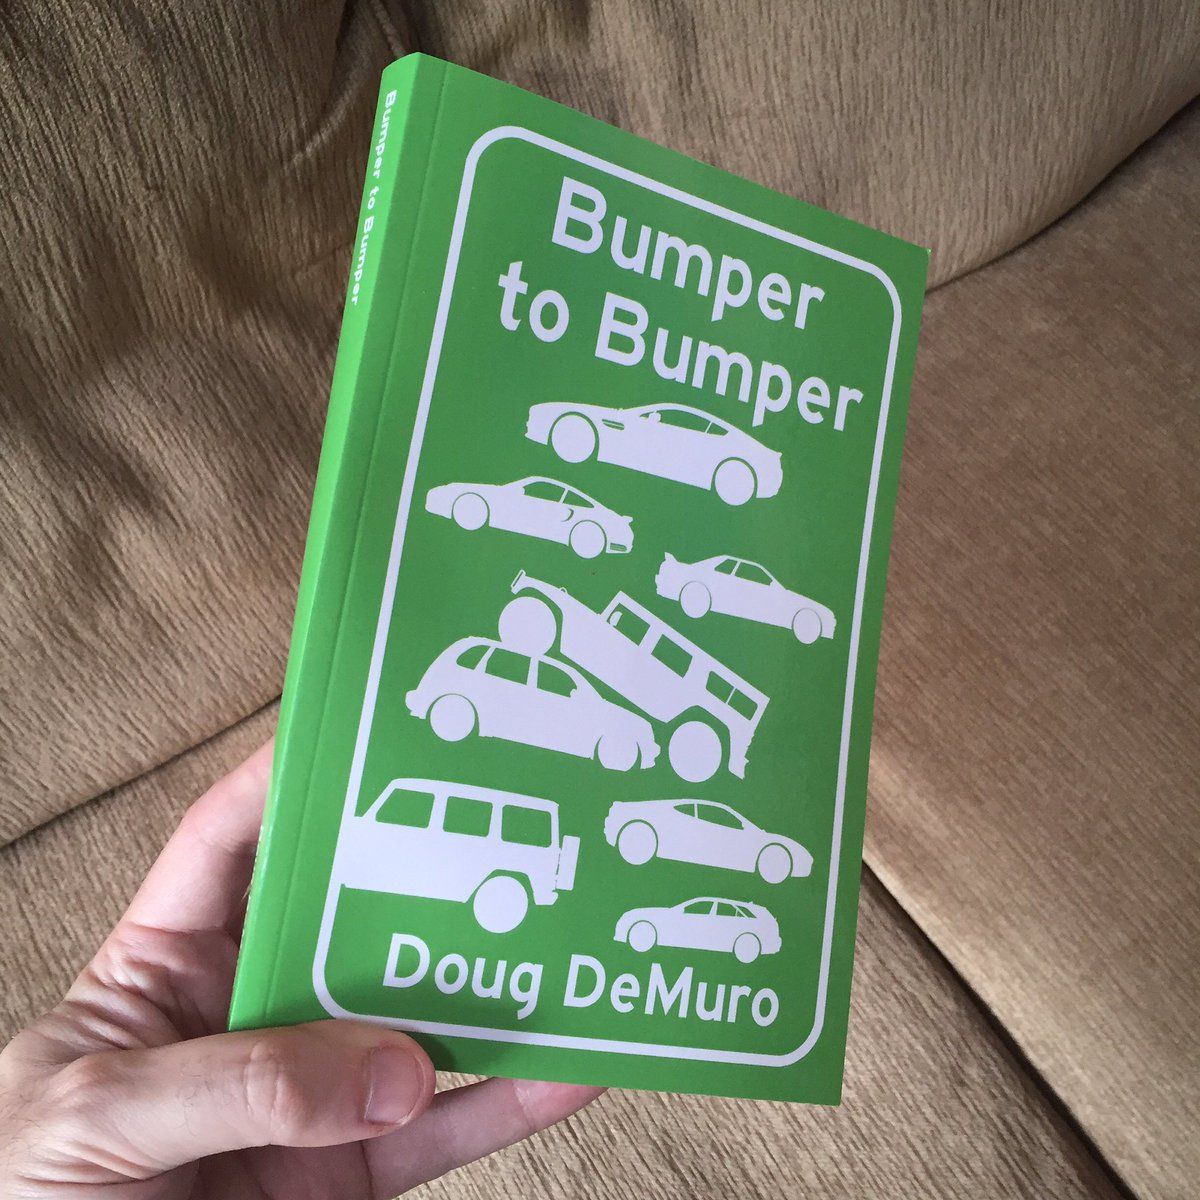 doug demuro's book